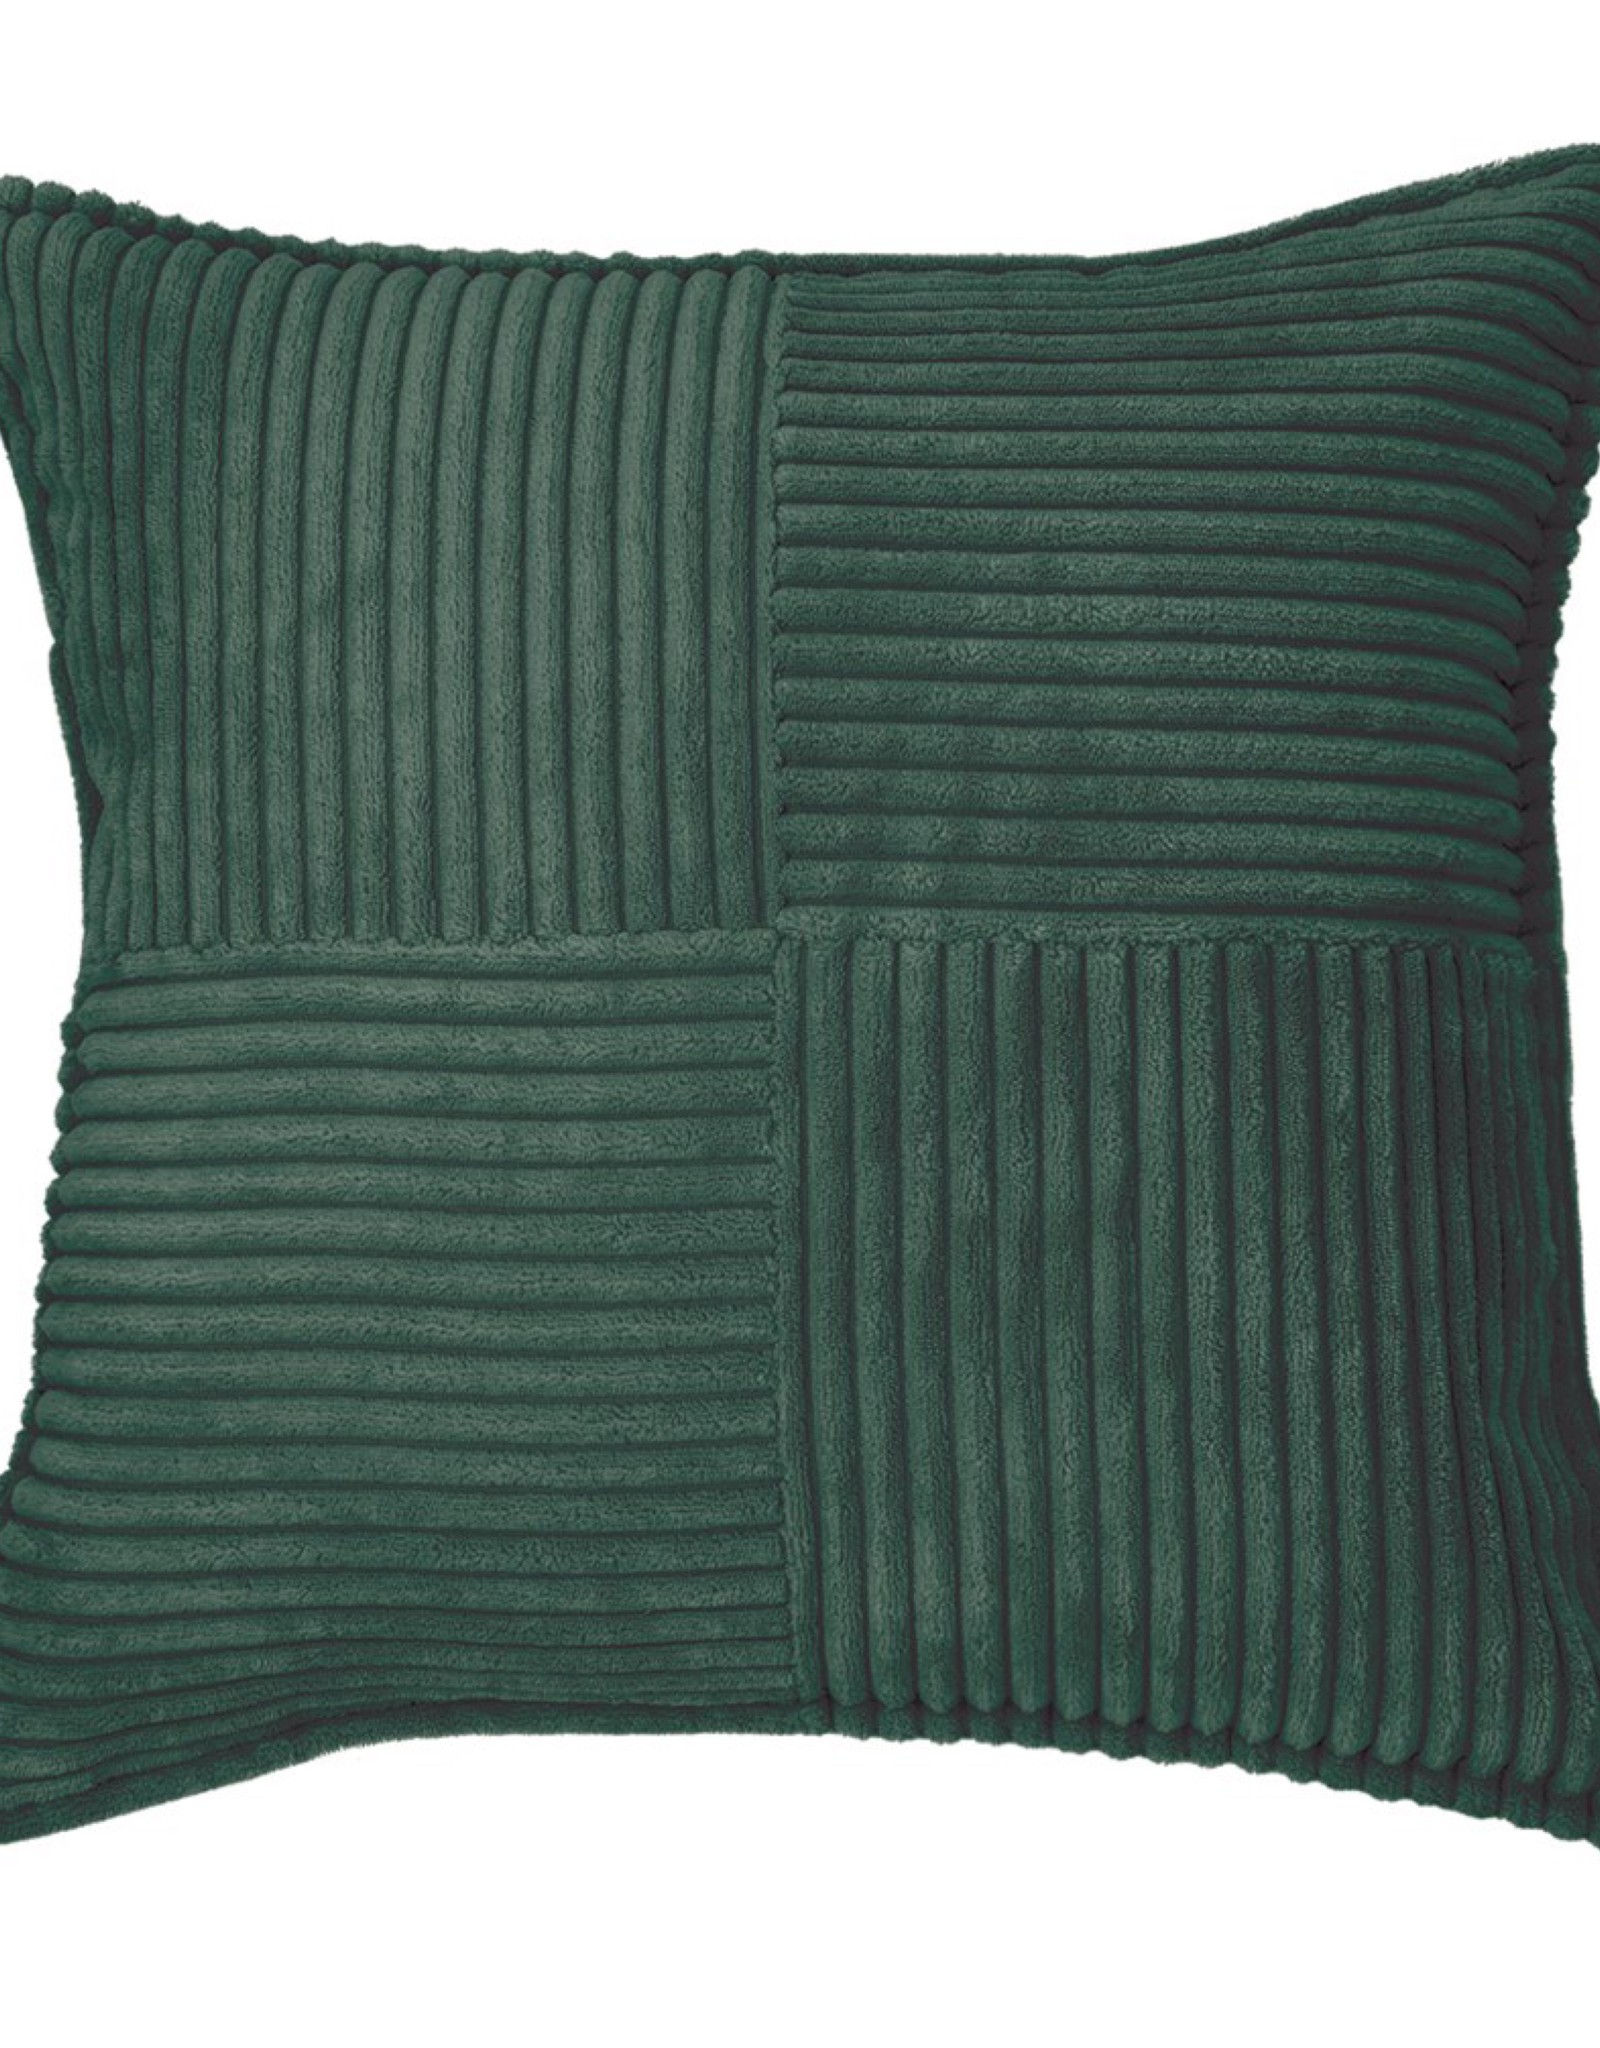 Cushions Brunelli Moumou Green Corduroy Velvet 18 x 18